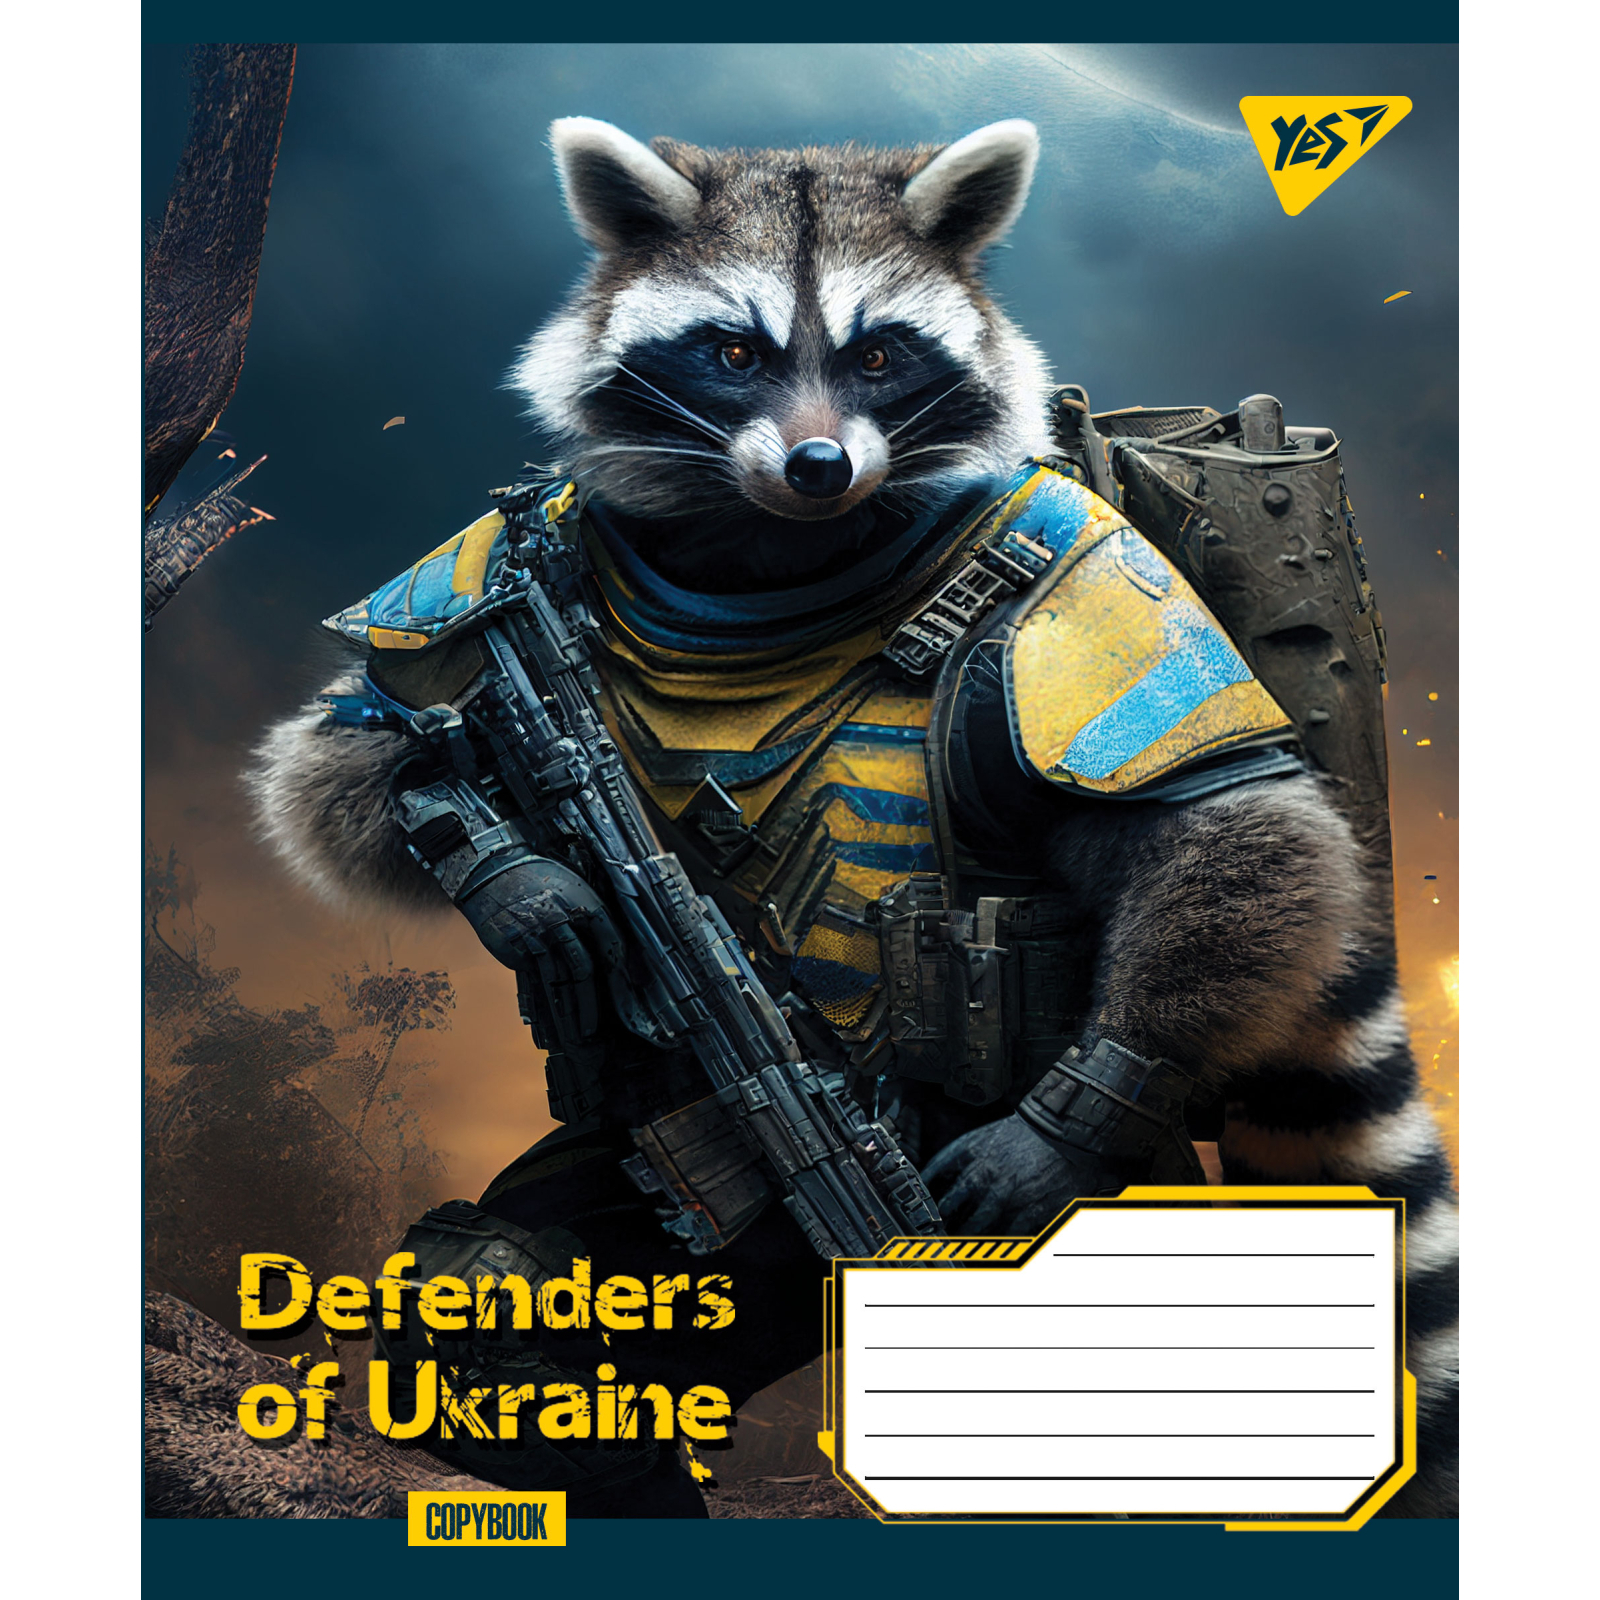 Зошит Yes А5 Defenders of Ukraine 48 аркушів, лінія (766455) зображення 4